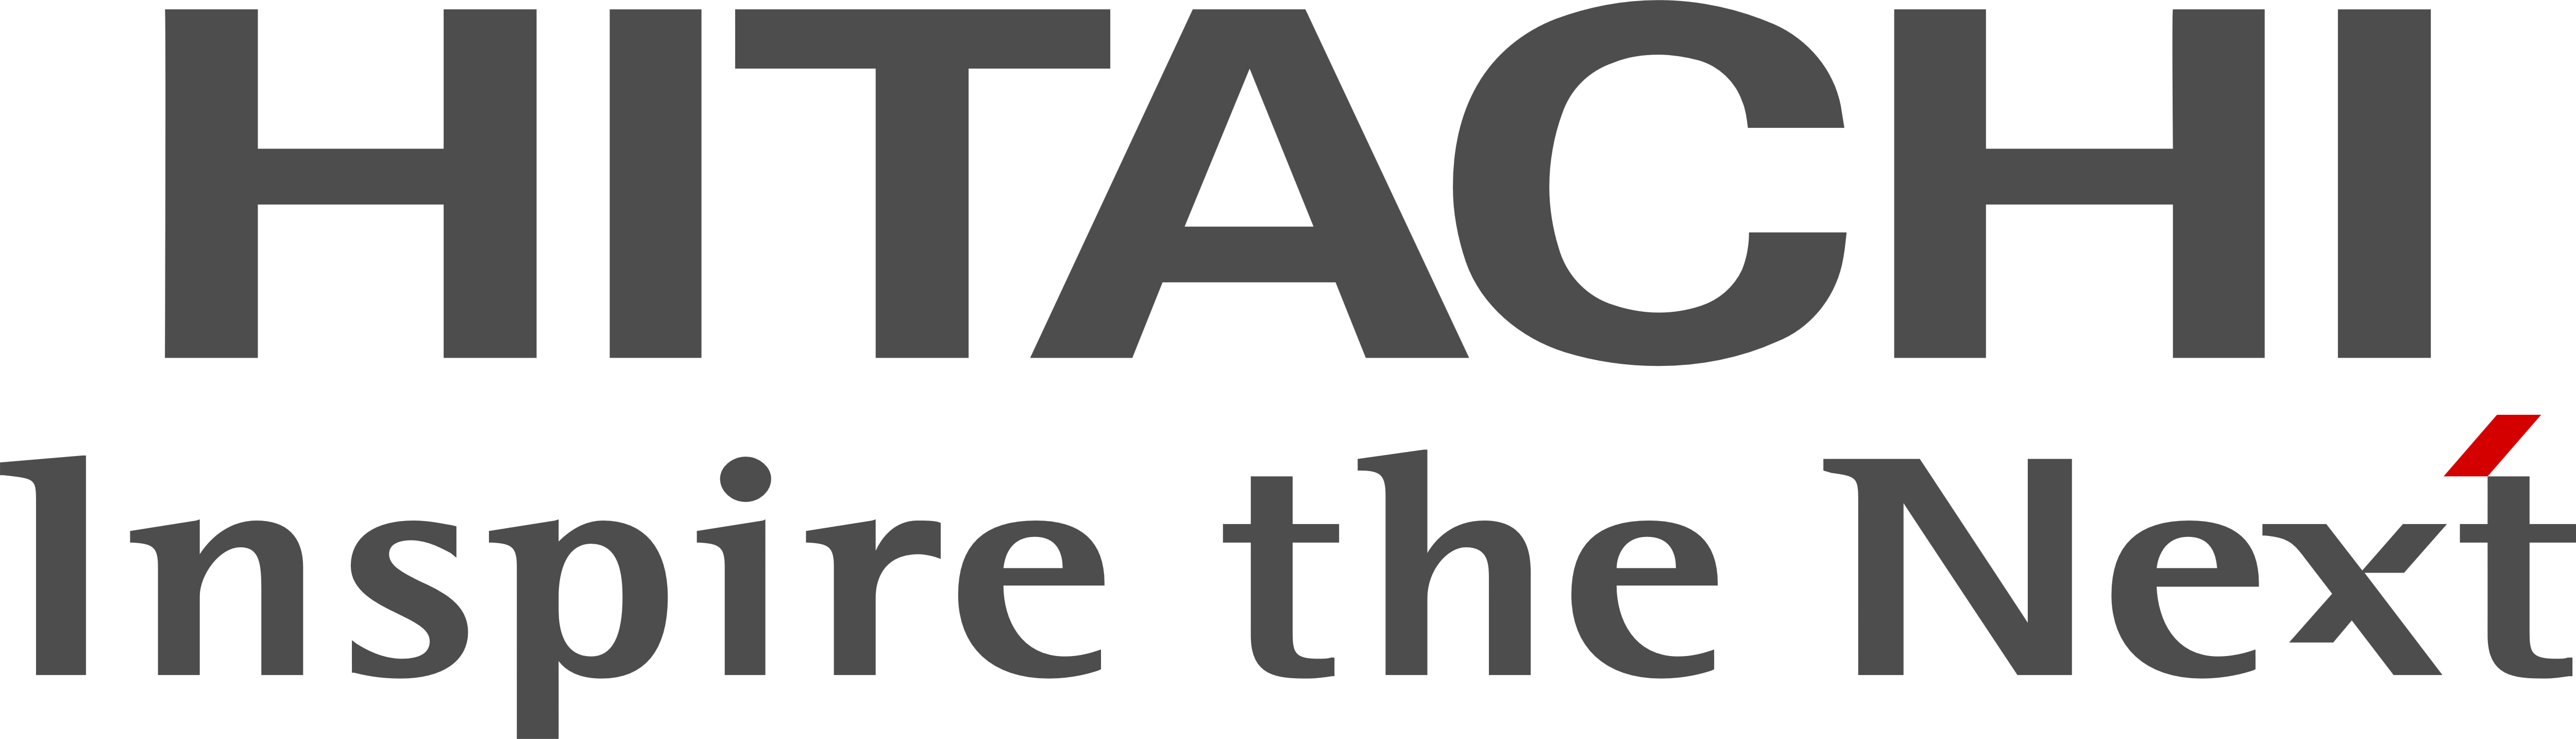 Hitachi Logo - Hitachi – Logos Download